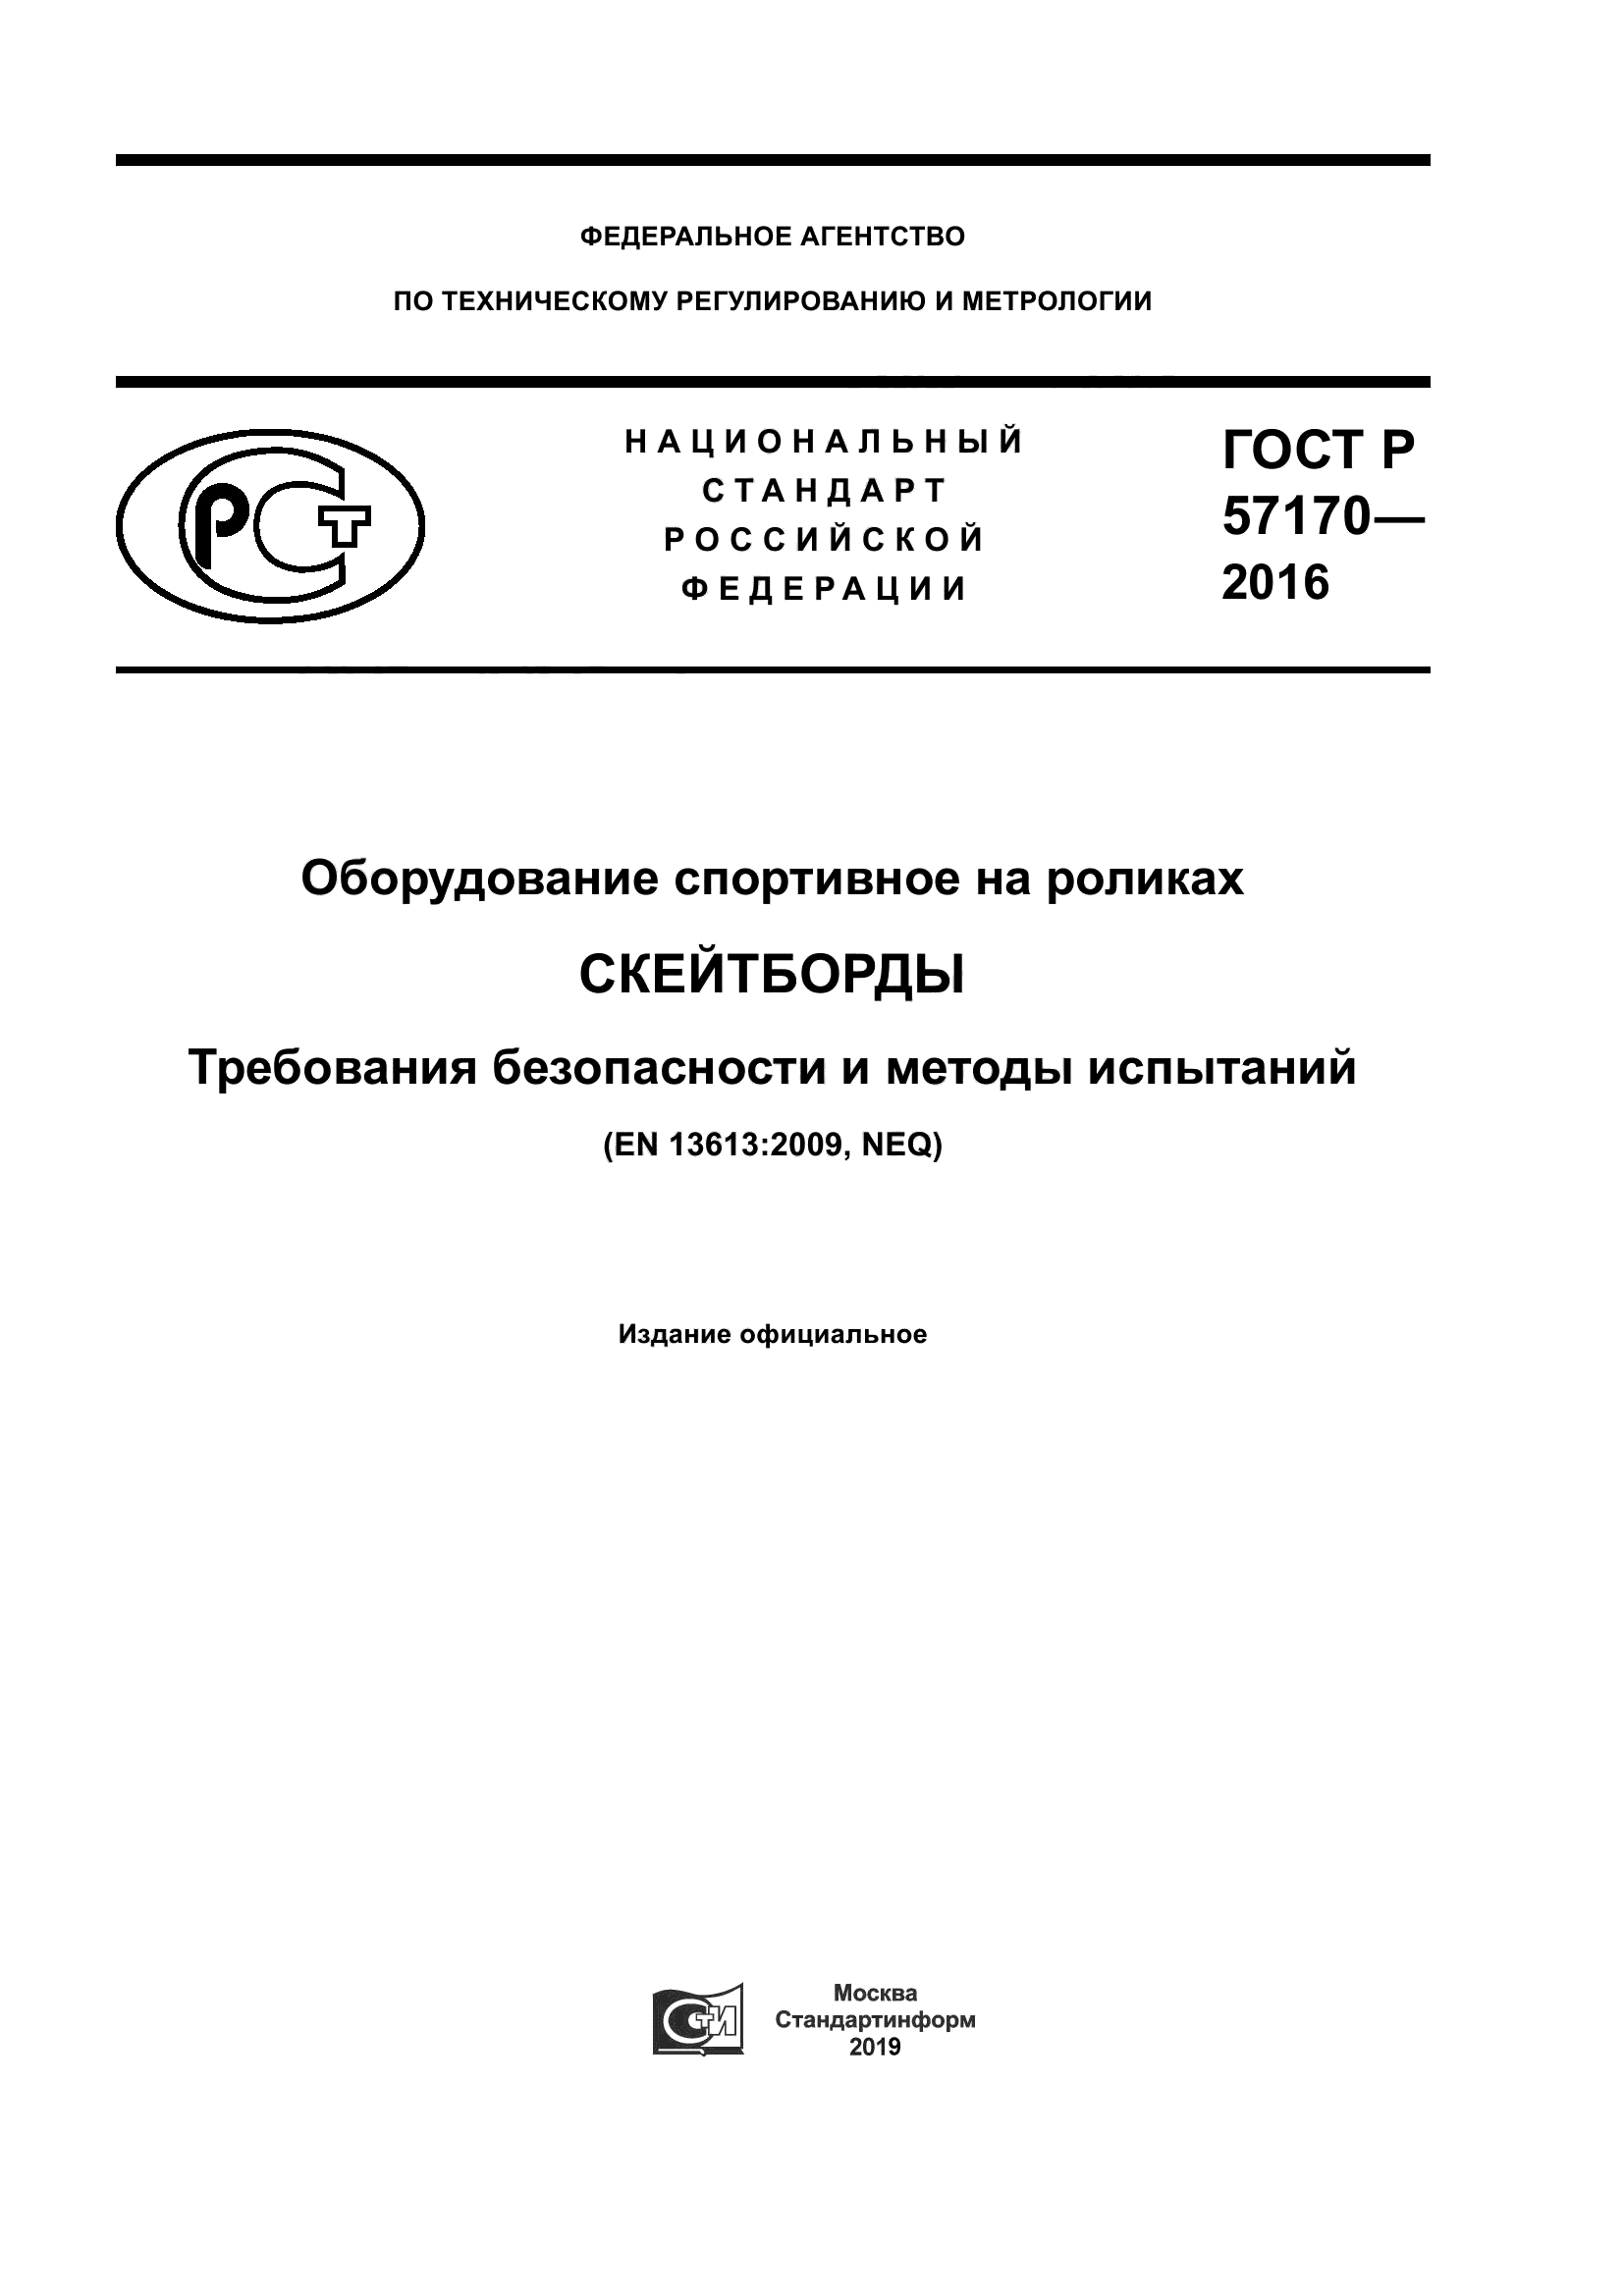 ГОСТ Р 57170-2016